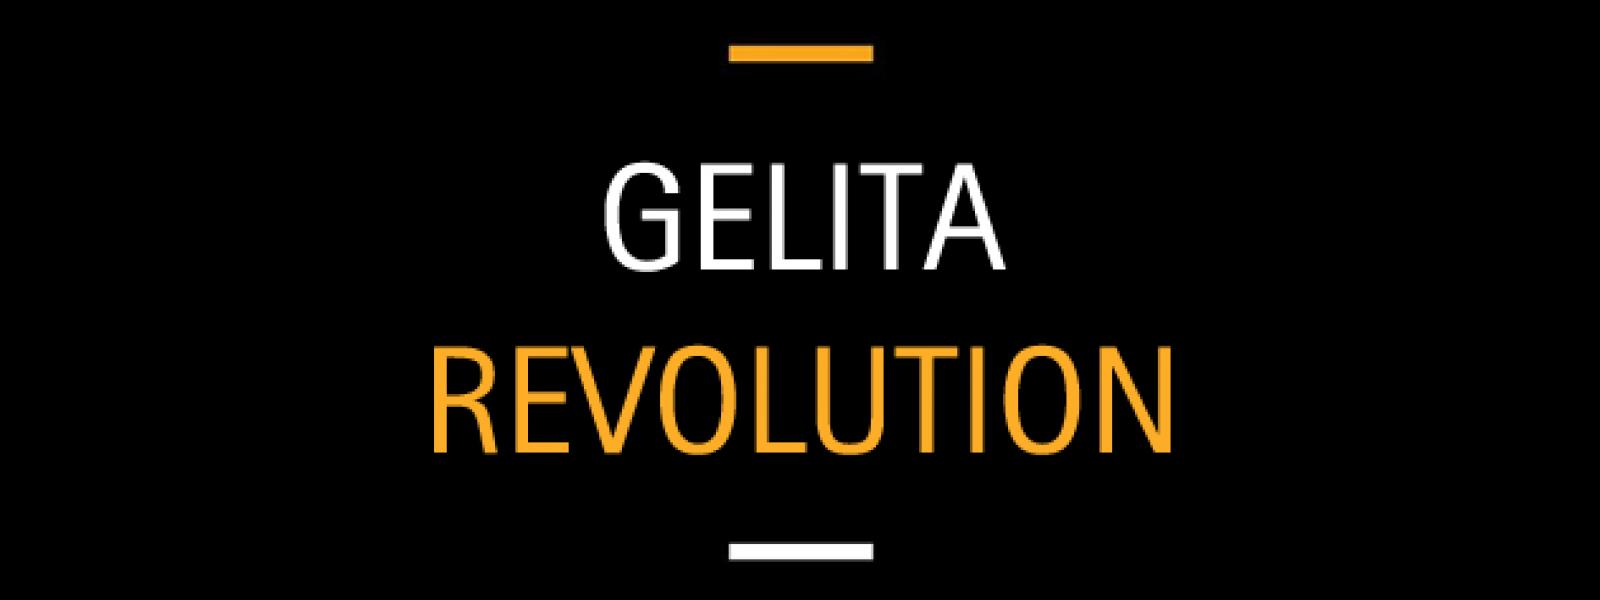 GELITA REVOLUTION - CHILE